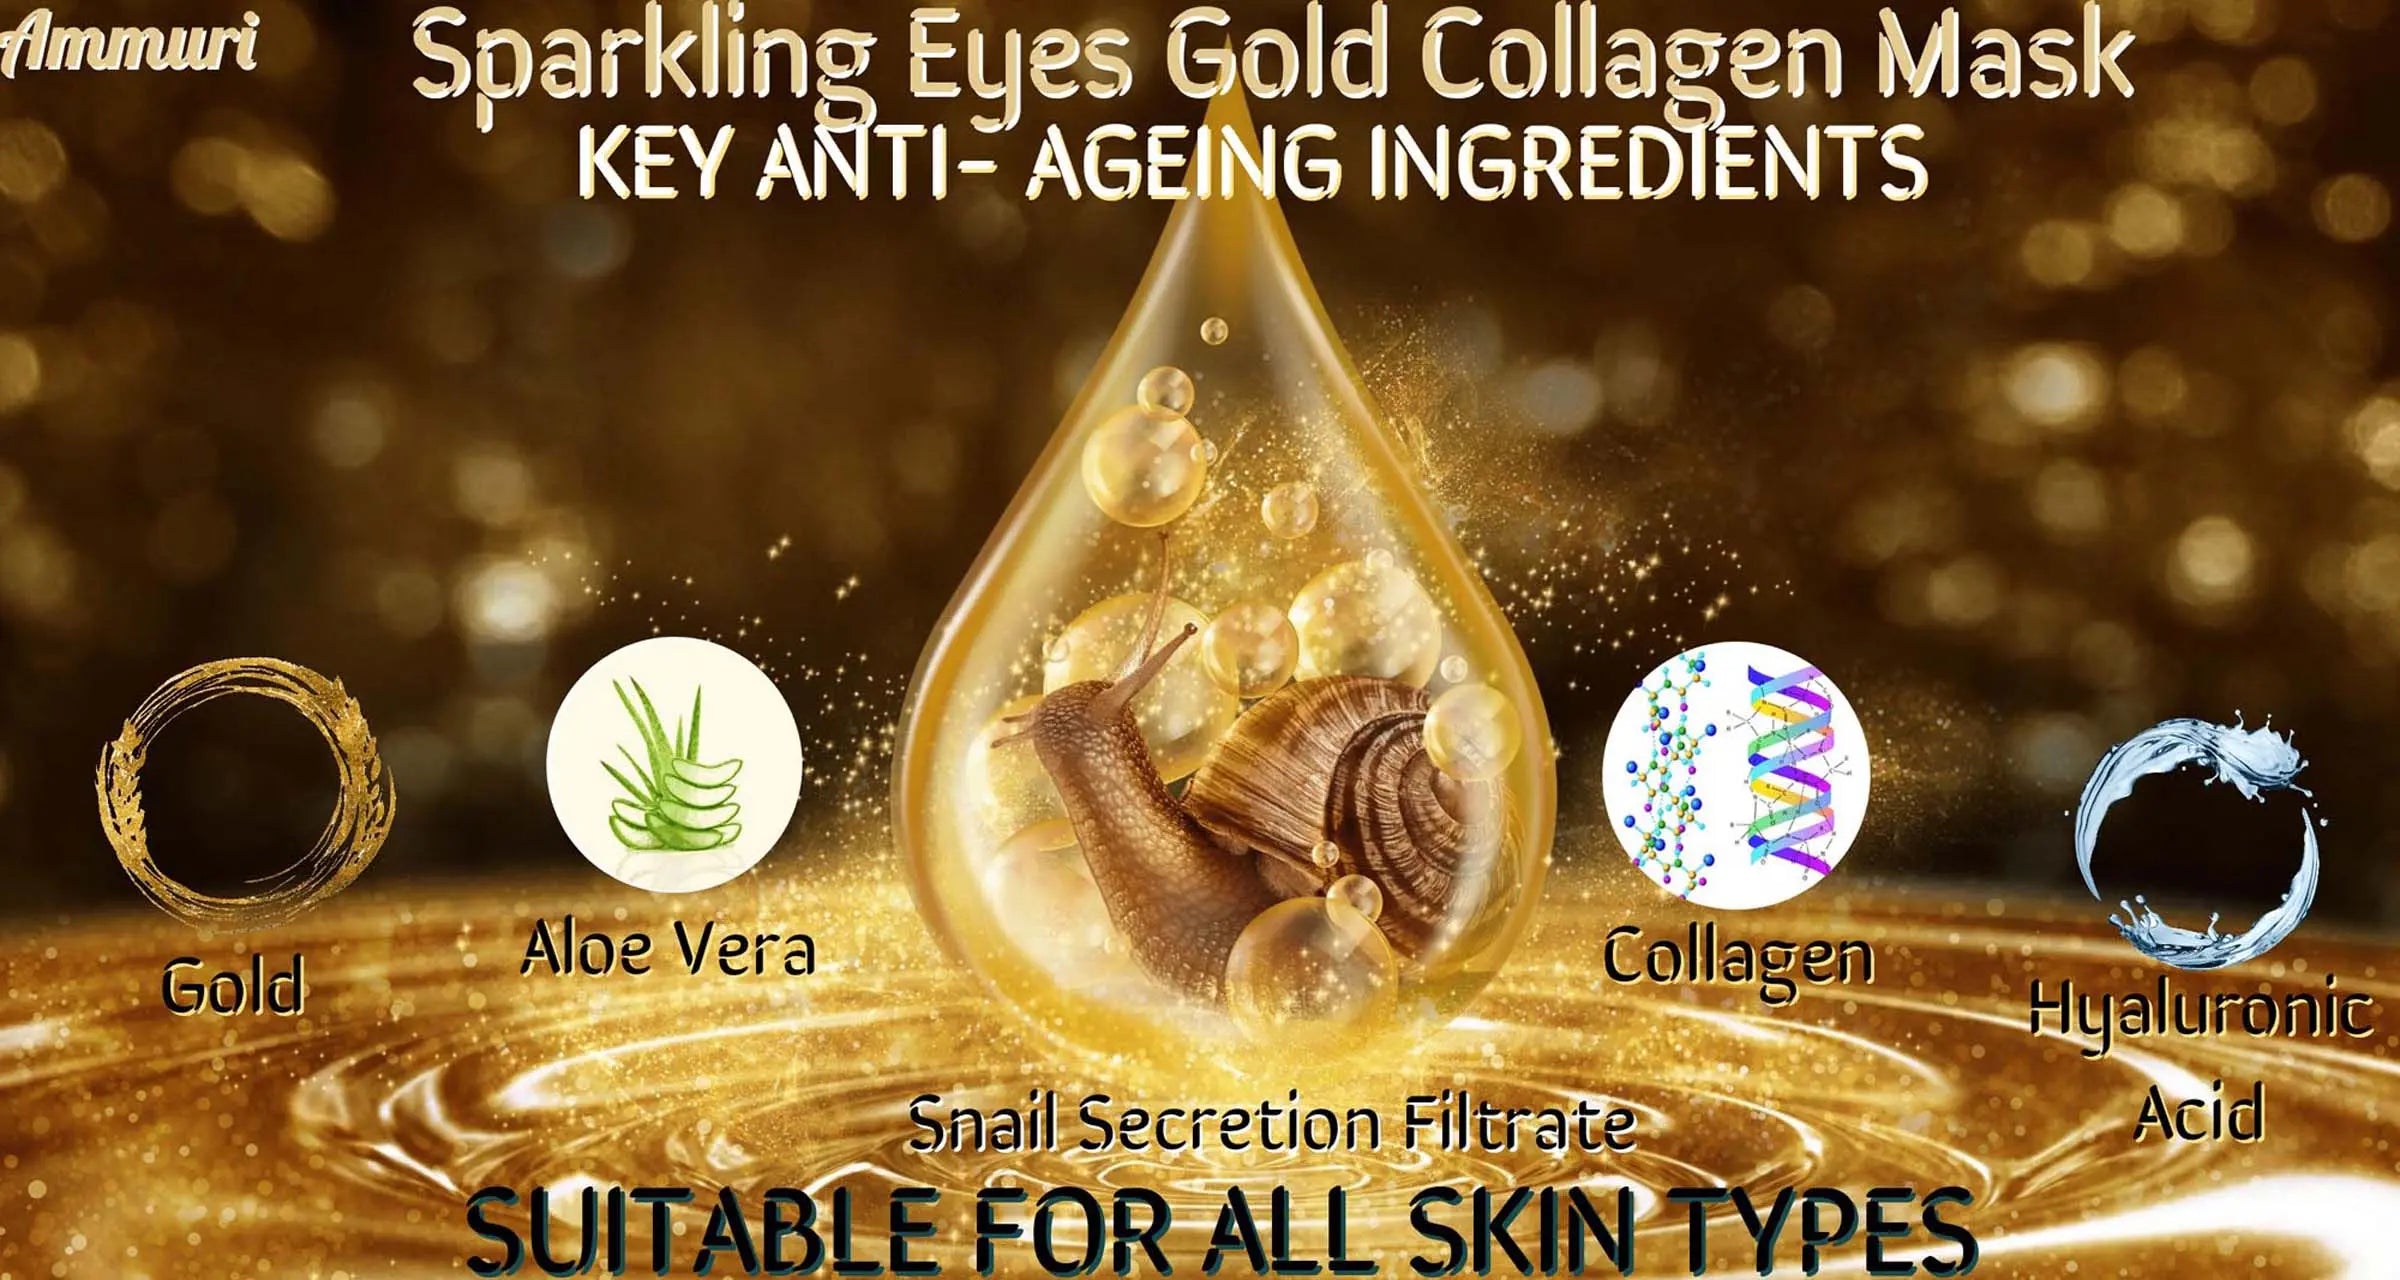 Ammuri Sparkling Collagen Gold Eyes Mask under Eye Patches Anti Wrinkles Ammuri Skincare